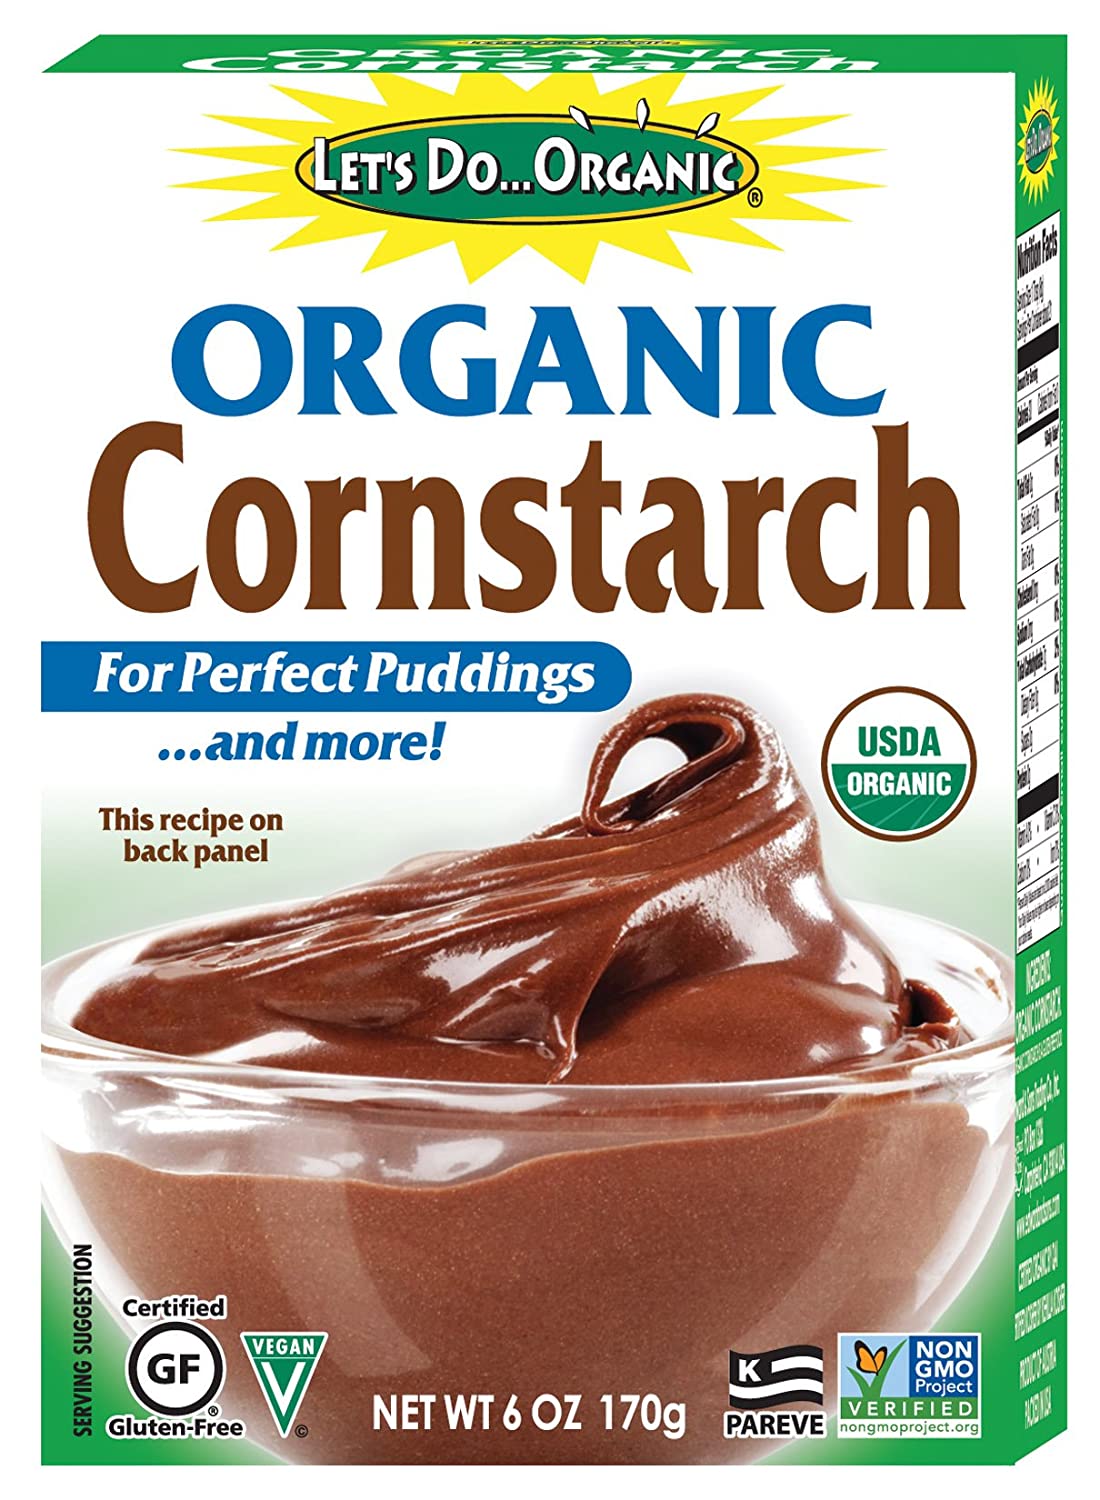 Let's Do Organic Cornstarch